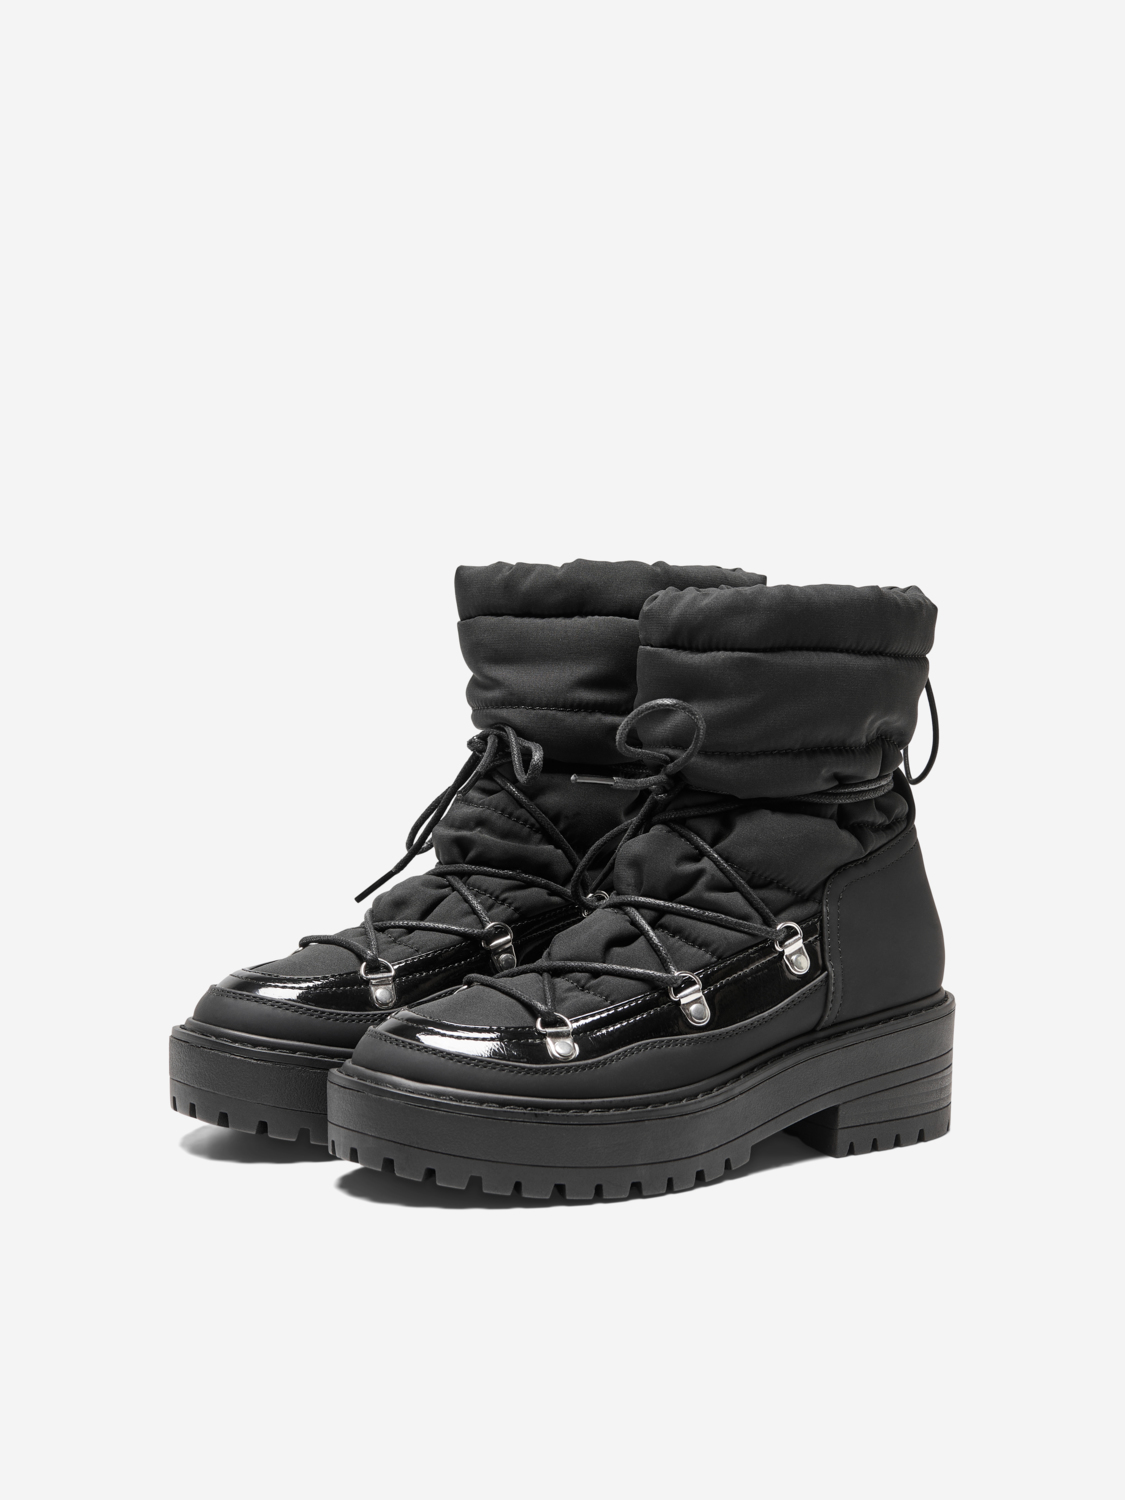 FINAL SALE - Brandie moon boots, BLACK, large